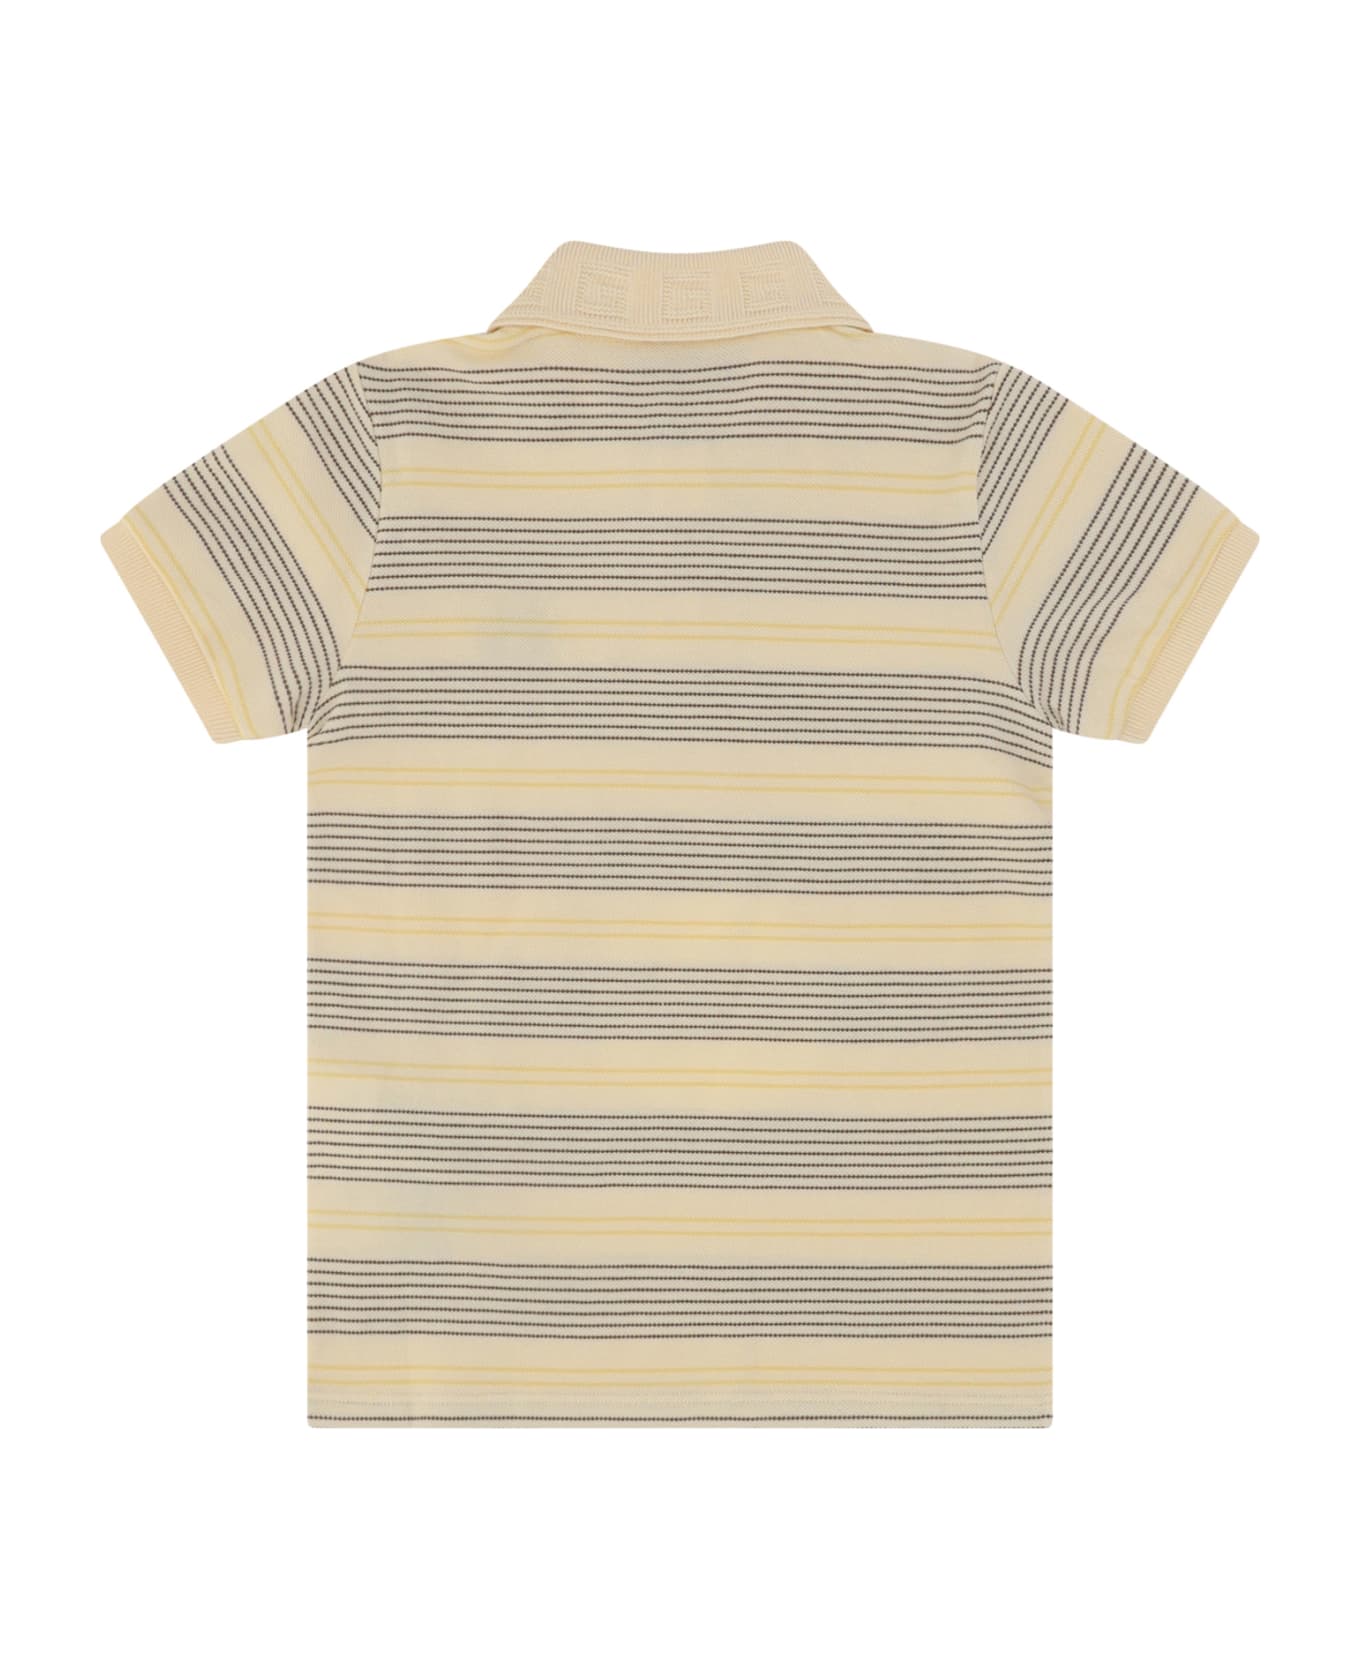 Gucci Polo usb Shirt For Boy - Yellow/brown